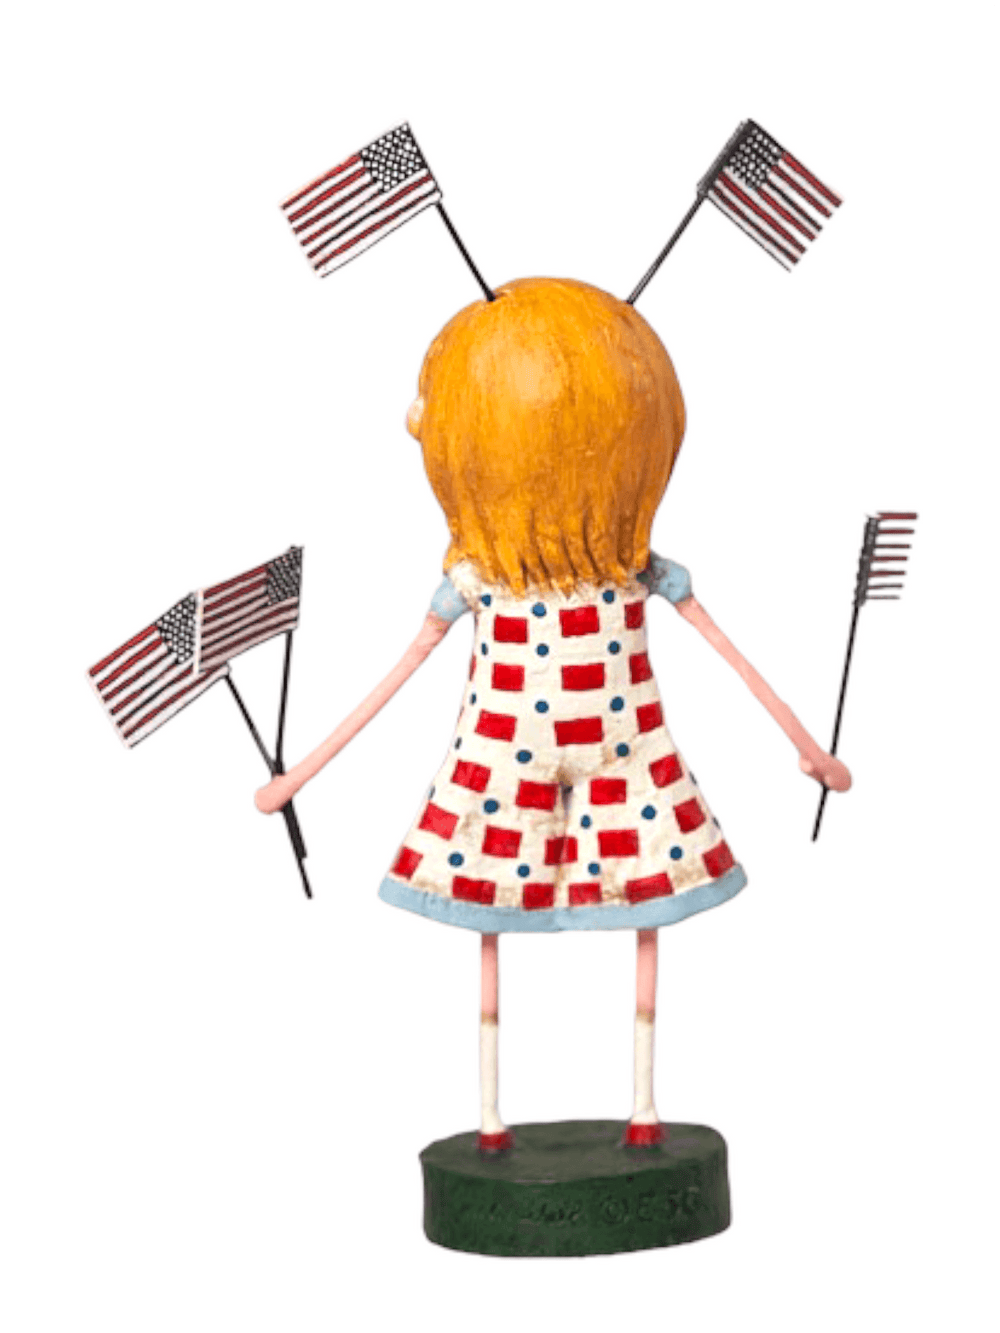 Fannie's Flags Lori Mitchell Figurine - Quirks!